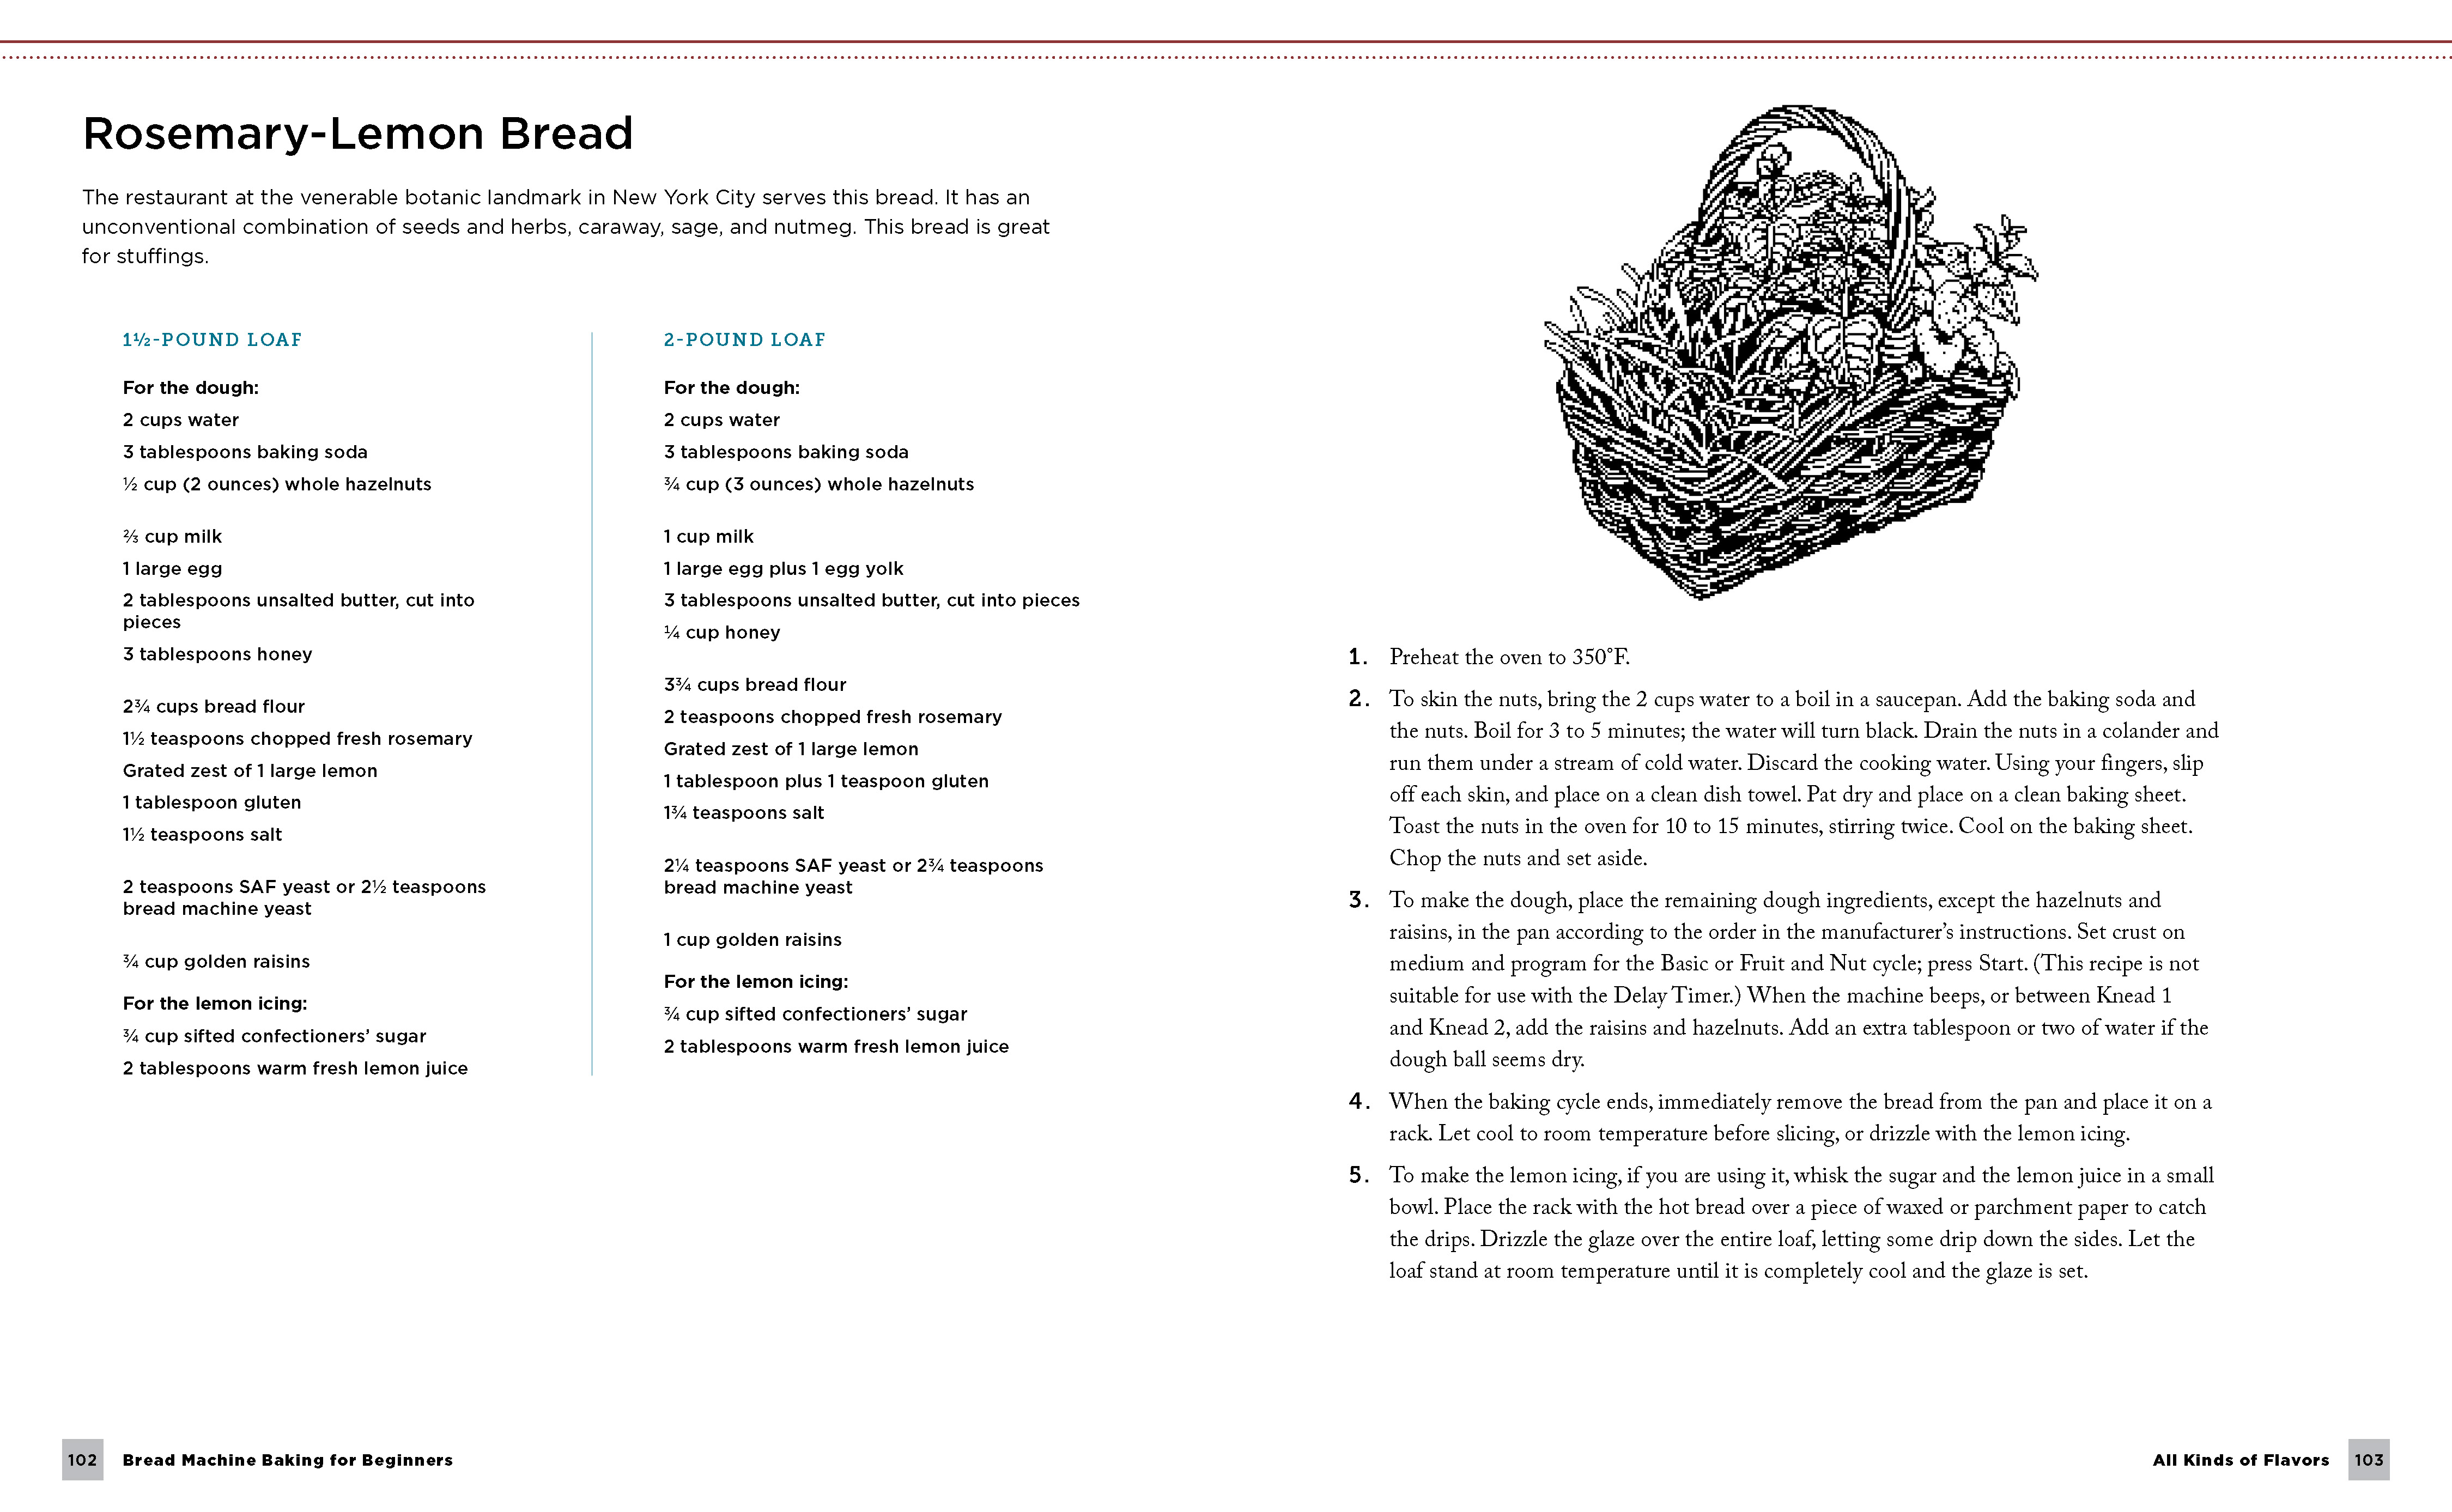 Bread Machine Baking for Beginners